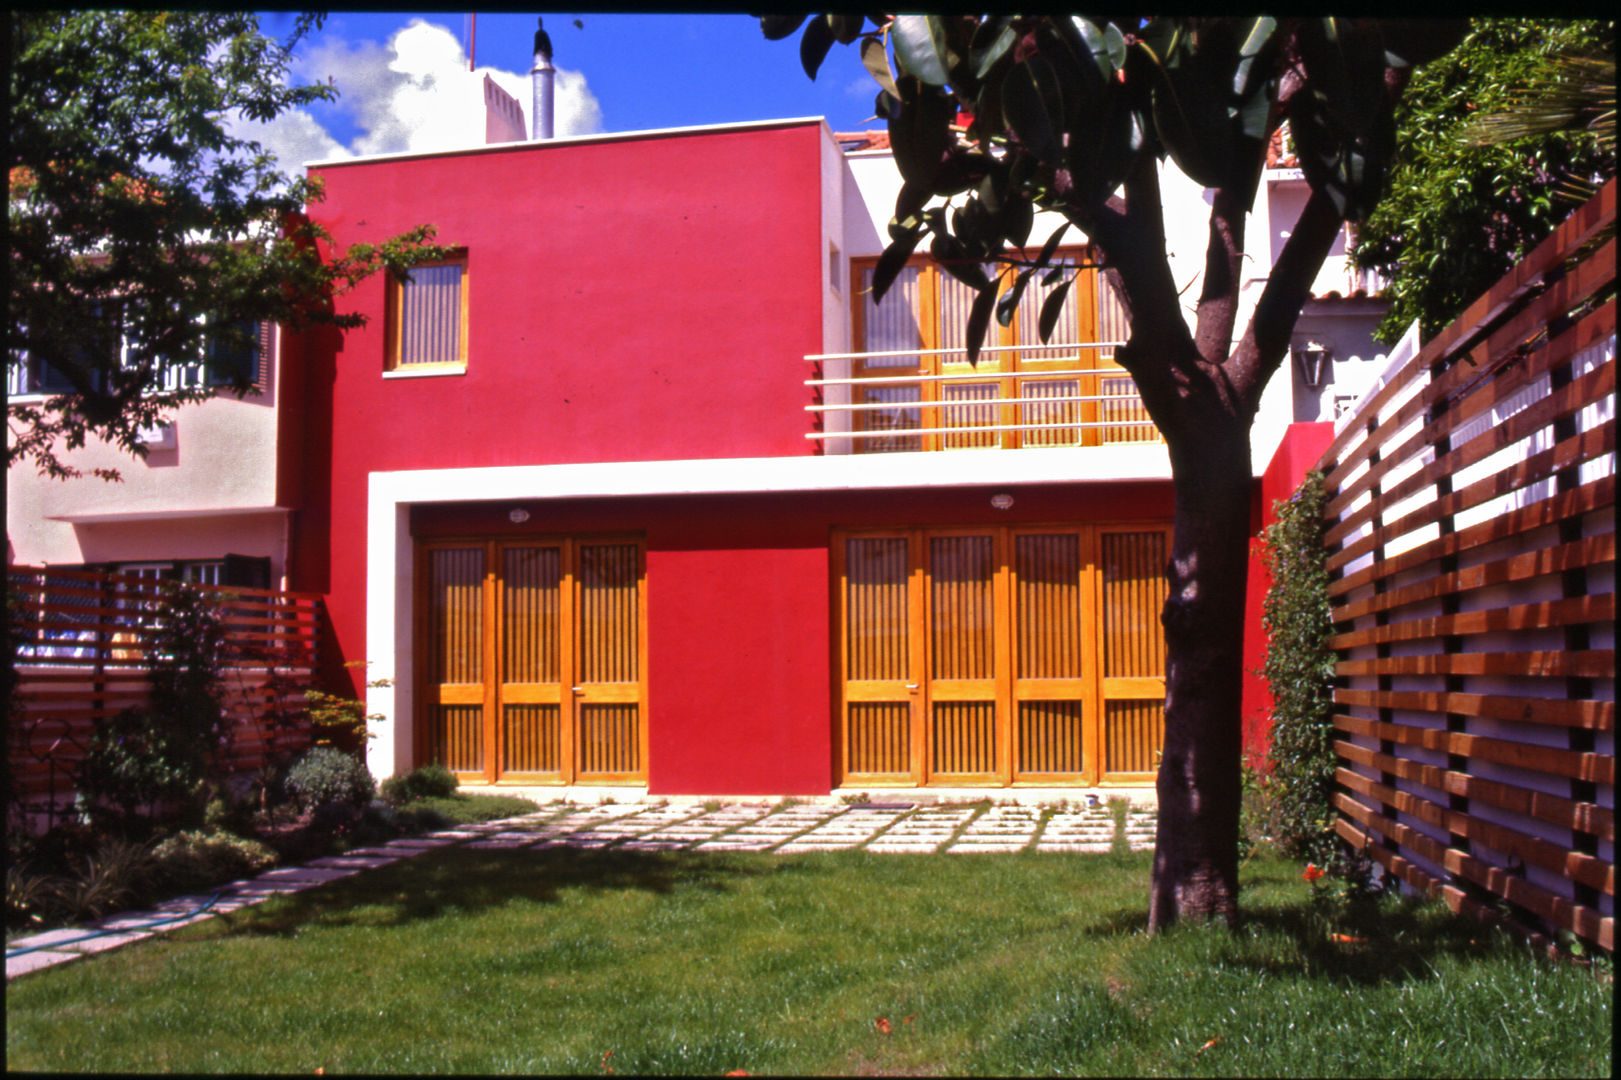 Casa no Restelo, Borges de Macedo, Arquitectura. Borges de Macedo, Arquitectura. Modern houses